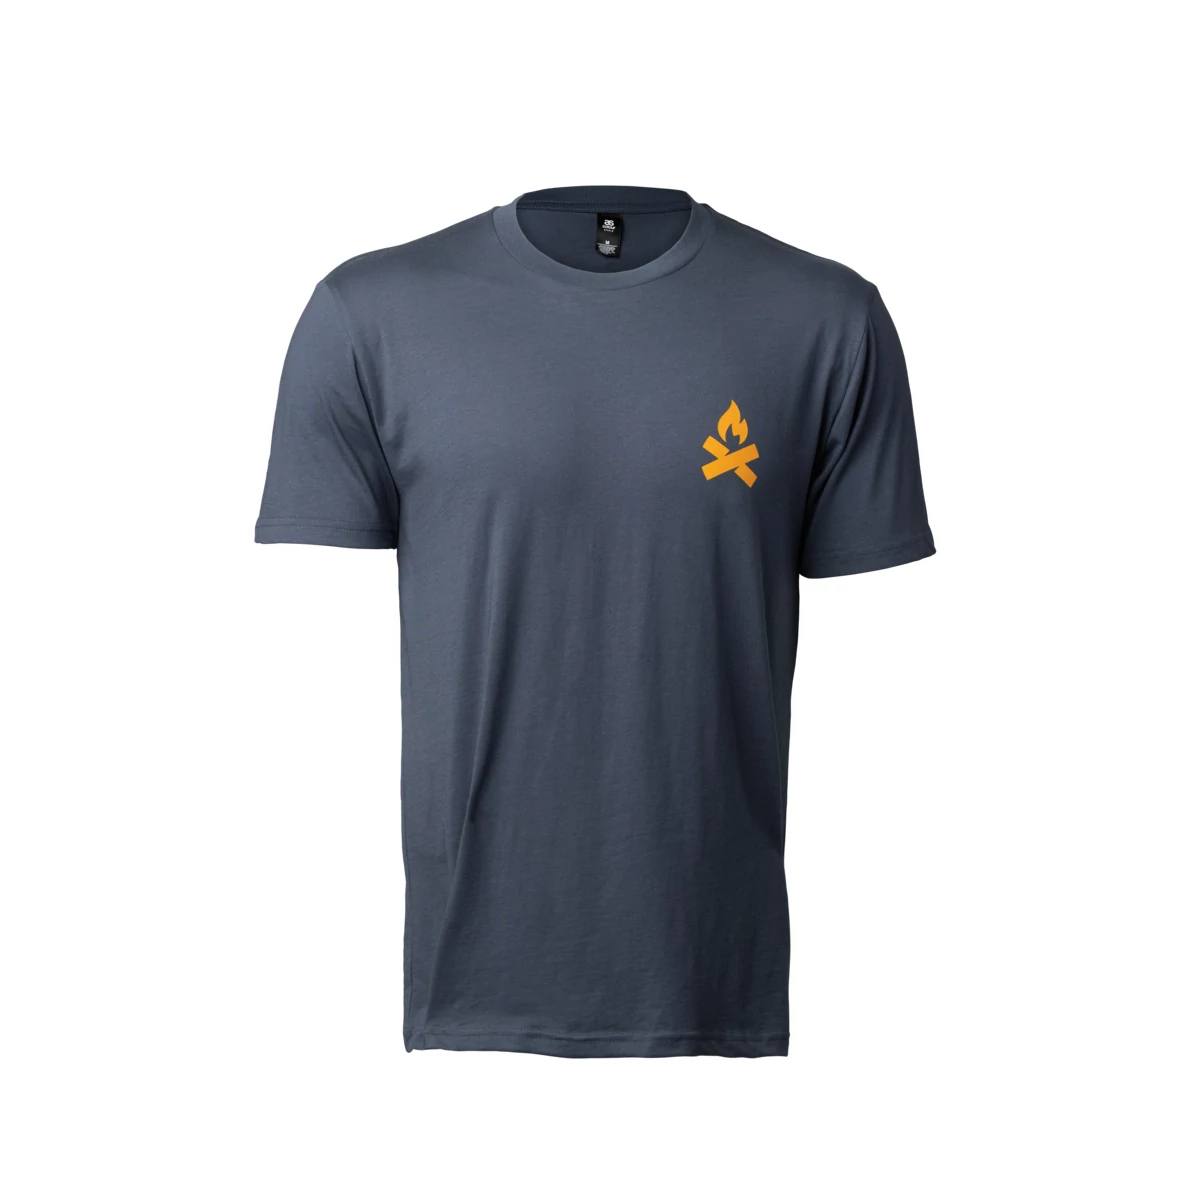 Camp Chef Blue Campsite T-Shirt - M